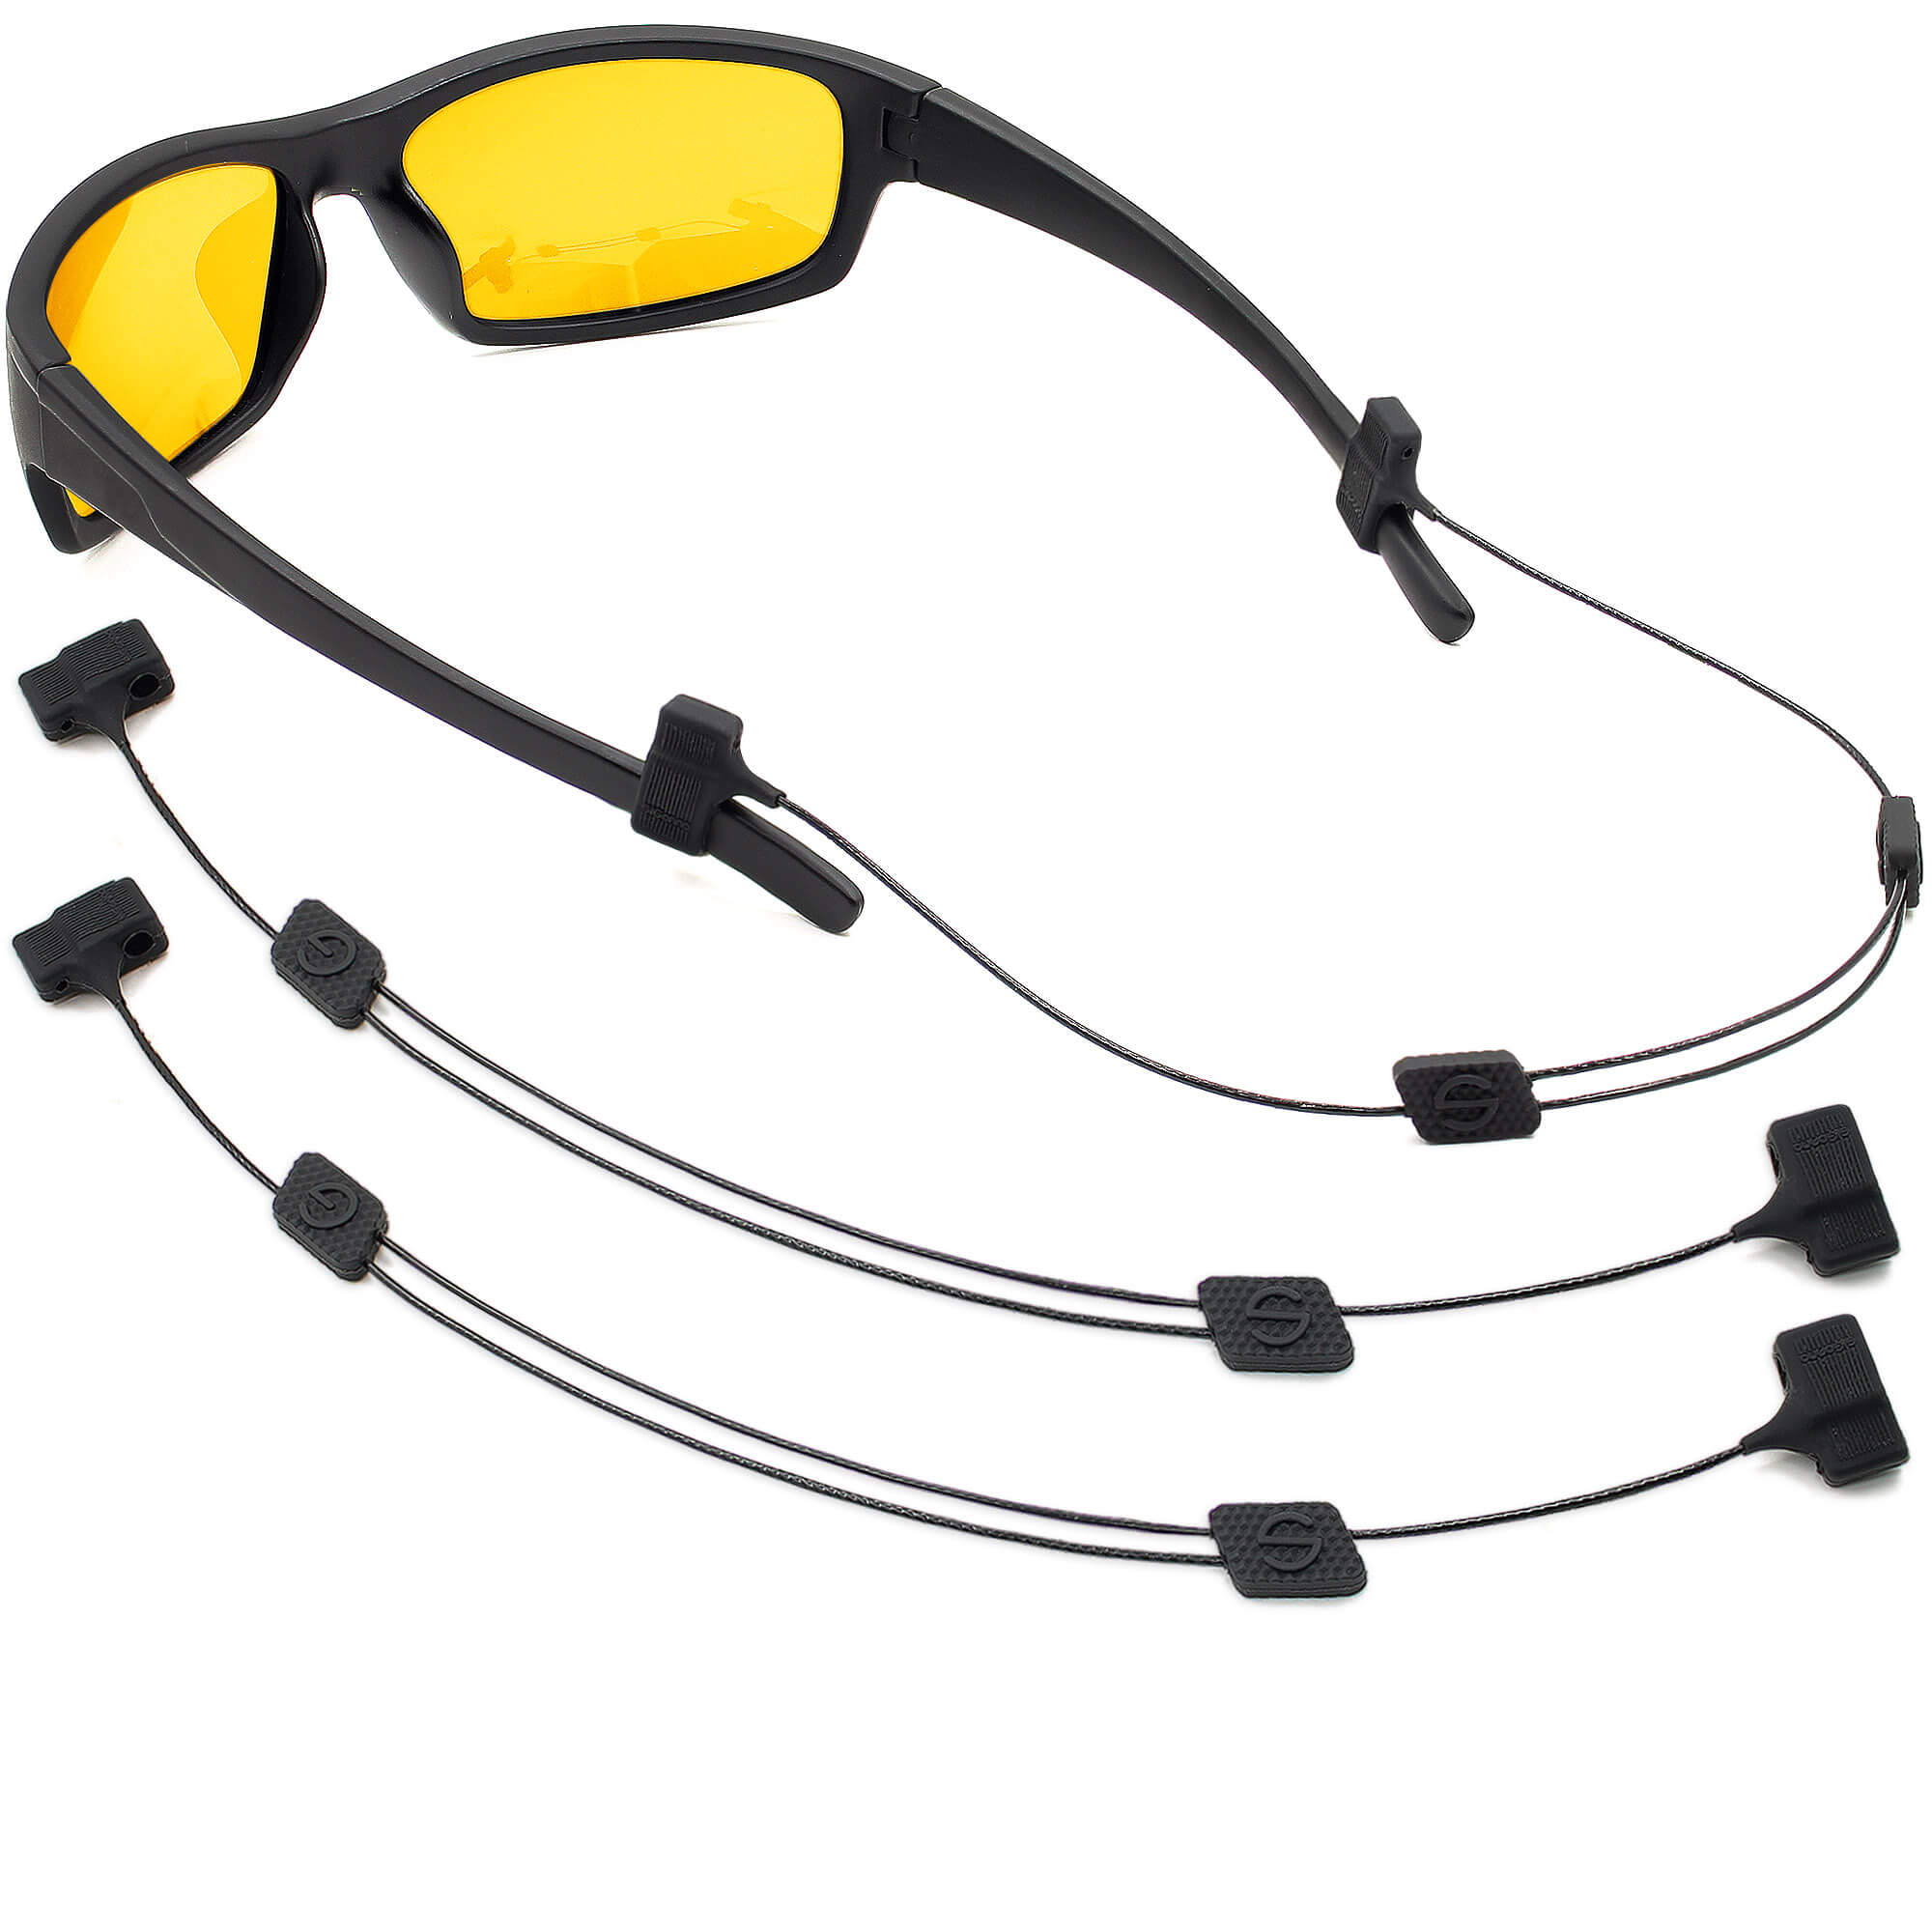 Wired Glasses Holder Strap | Sigonna